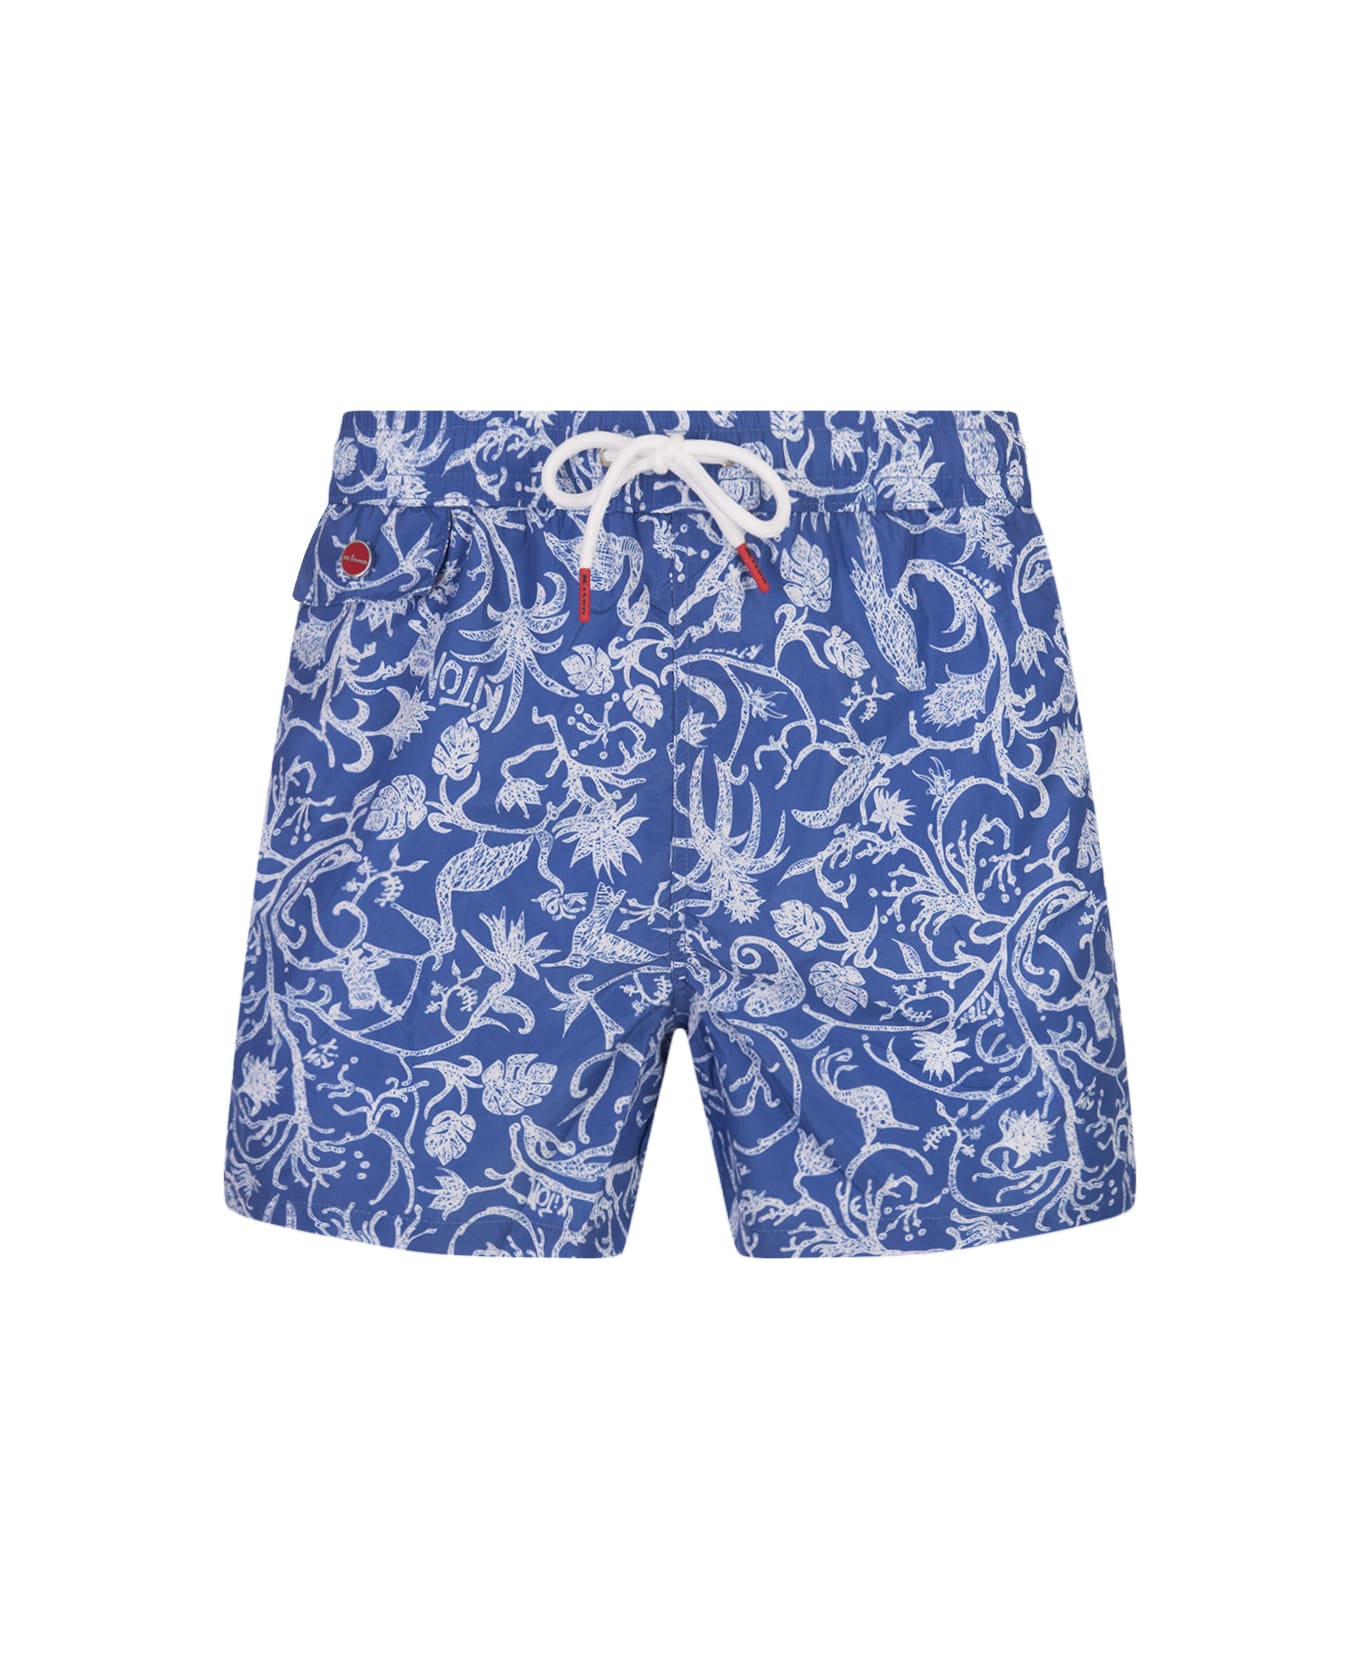 Kiton Blue Swim Shorts With White Fantasy Print - Blue